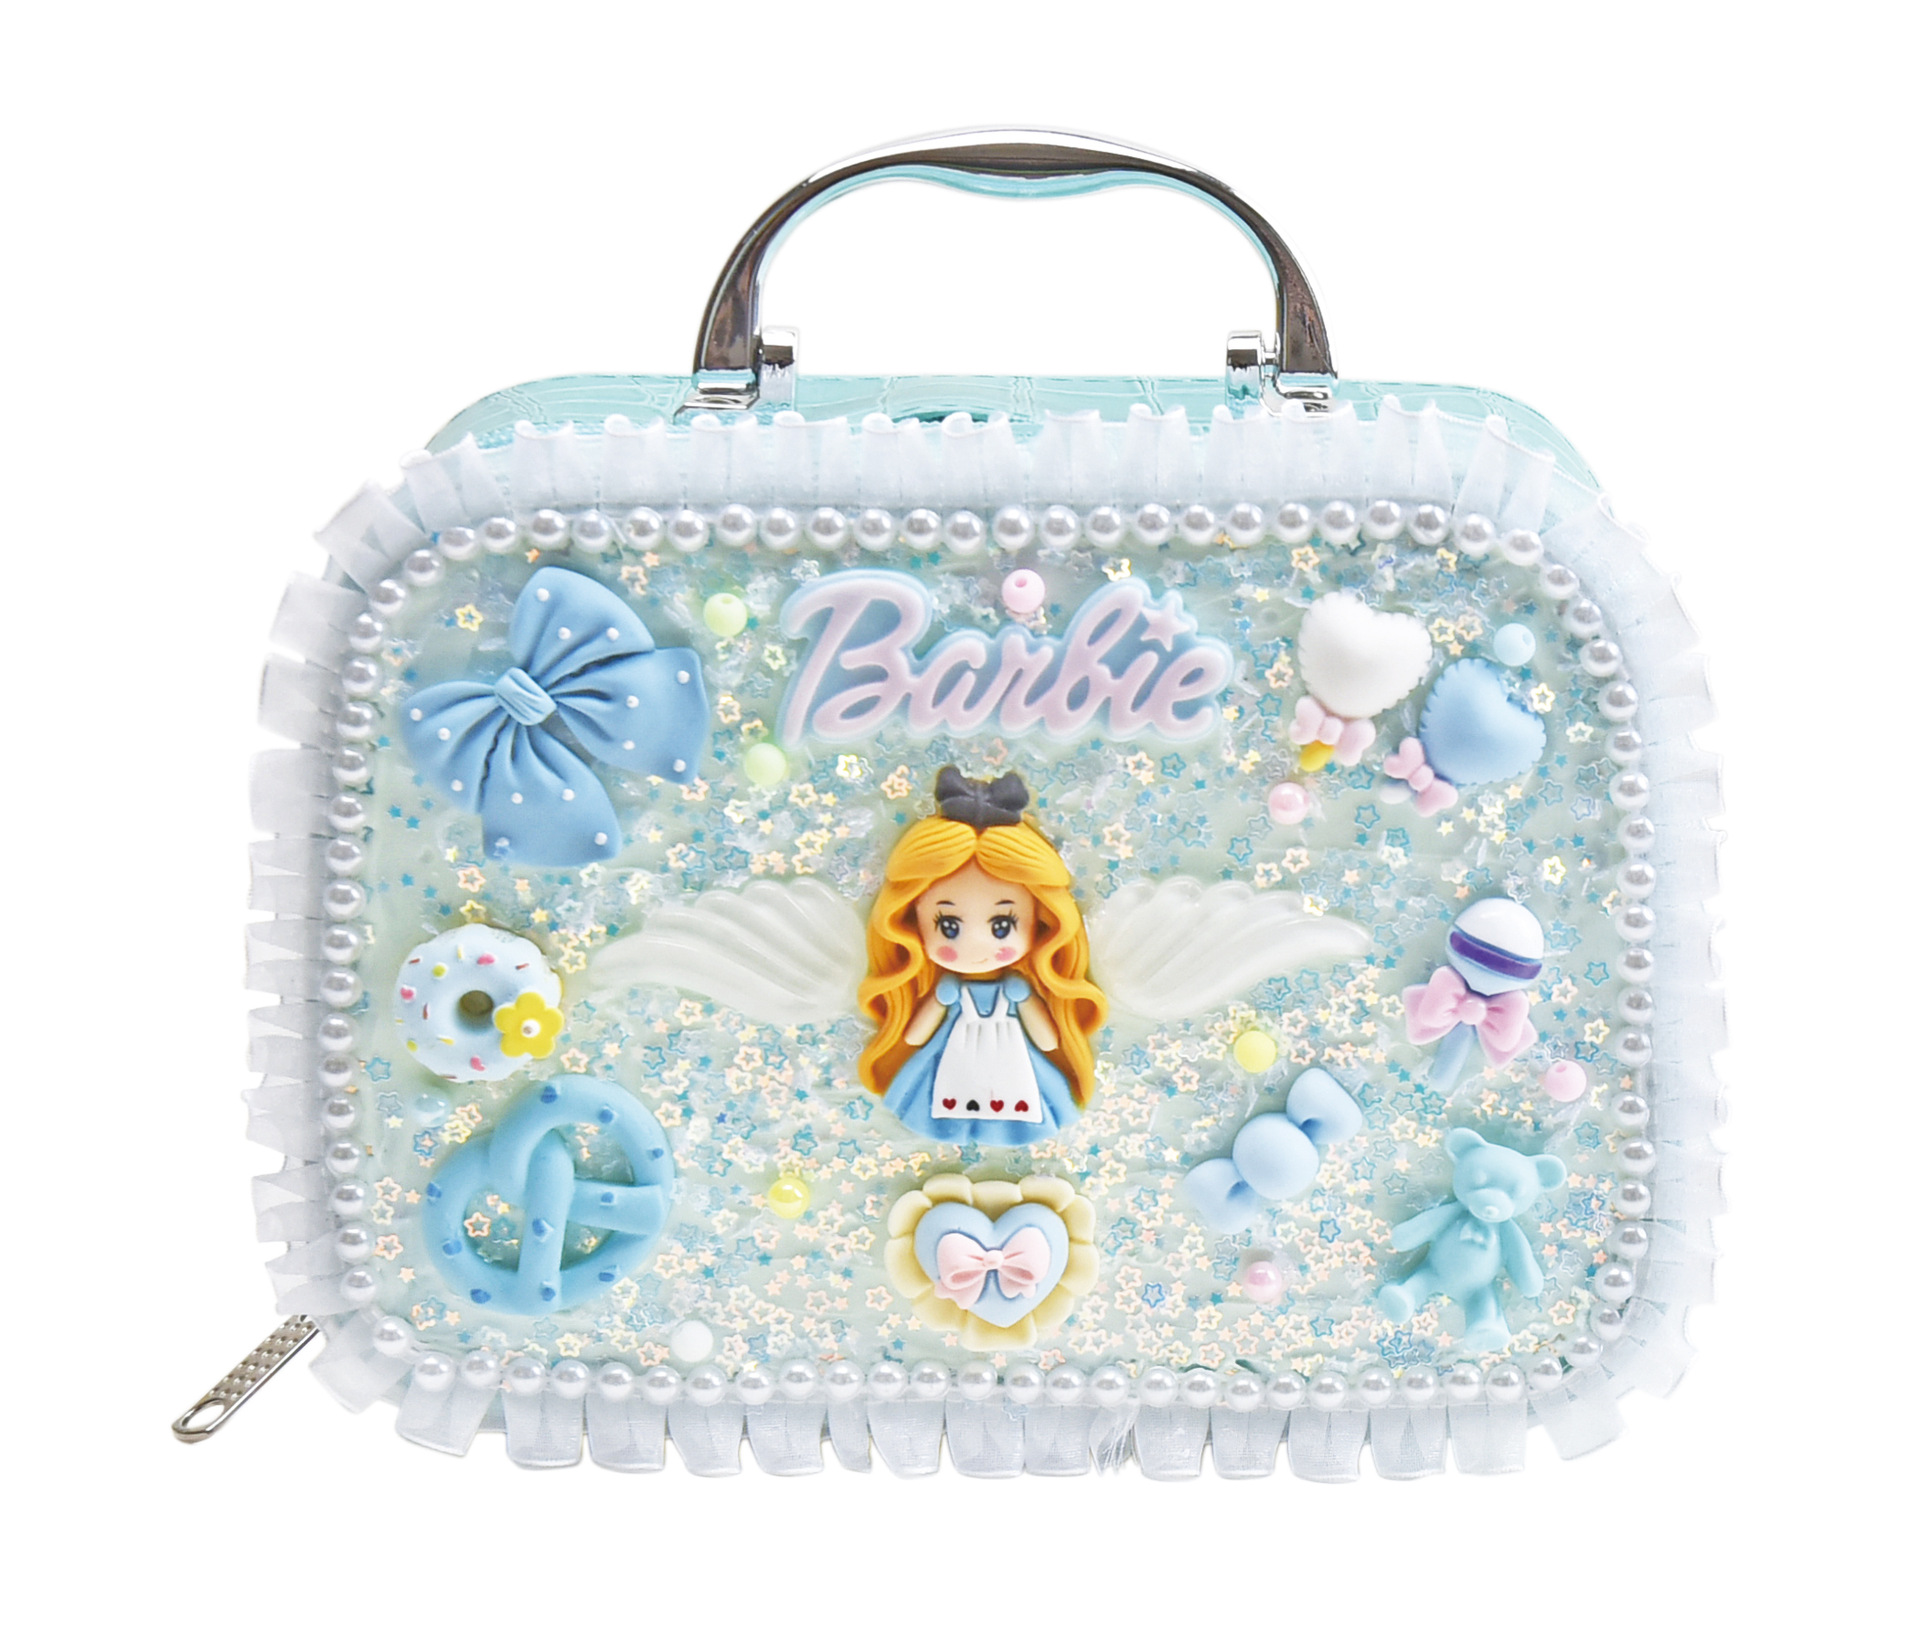 Children's Handmade DIY Waterproof Cosmetic Bag All-Match Cartoon Cute Cream Glue Handbag Girls' Toy Jewelry Box